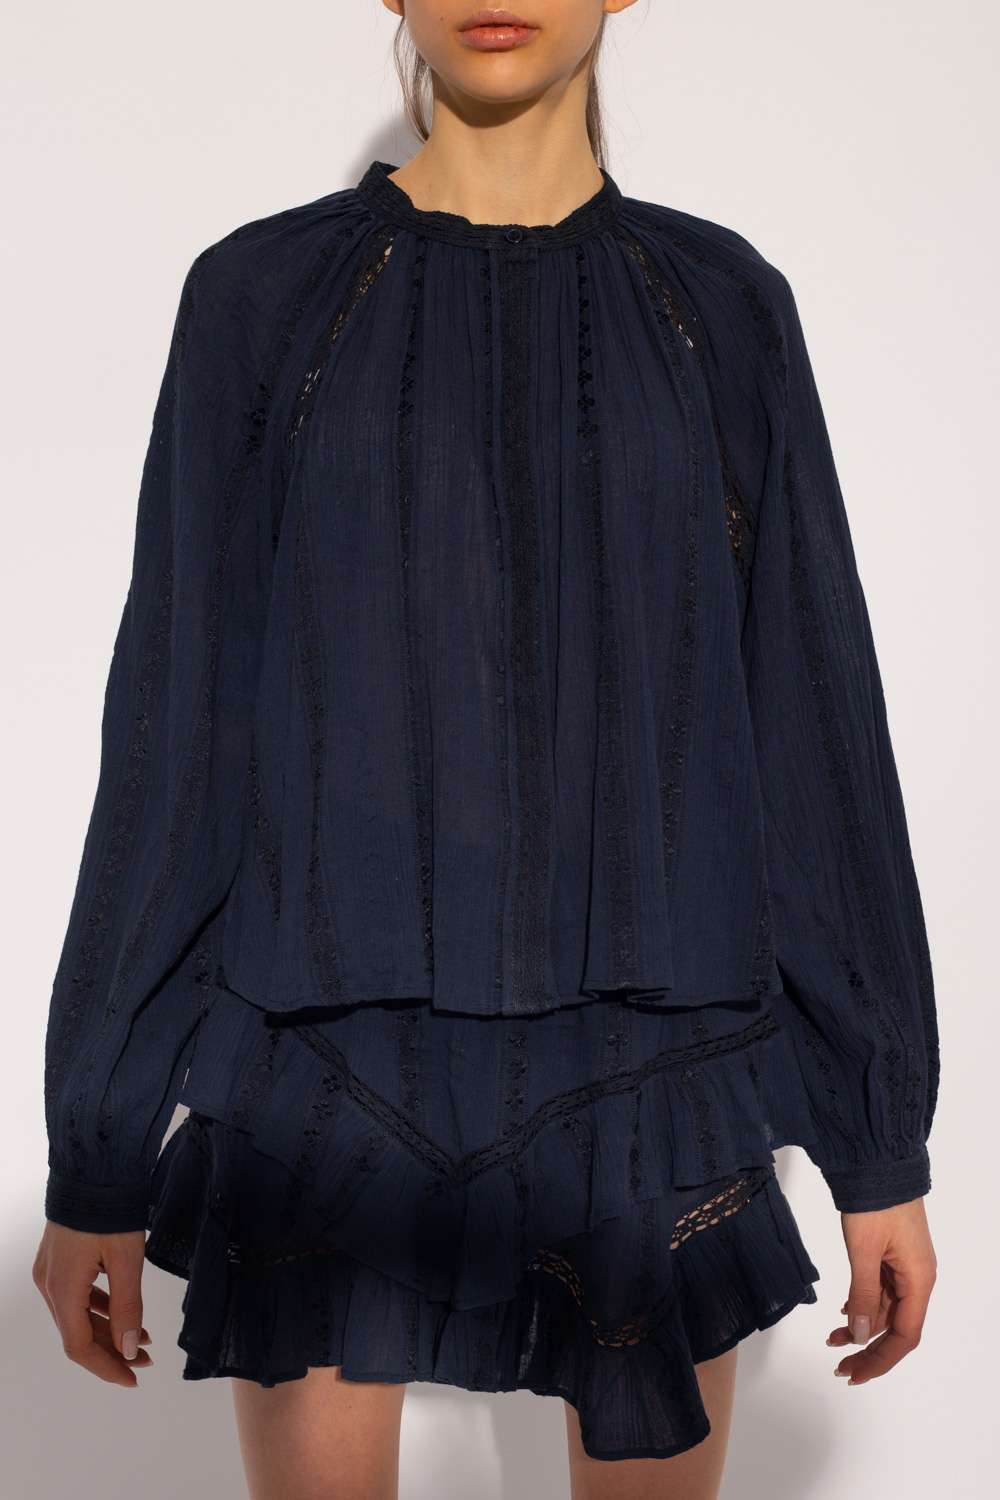 fringe-detail long-sleeve sweatshirt ‘Janelle’ top